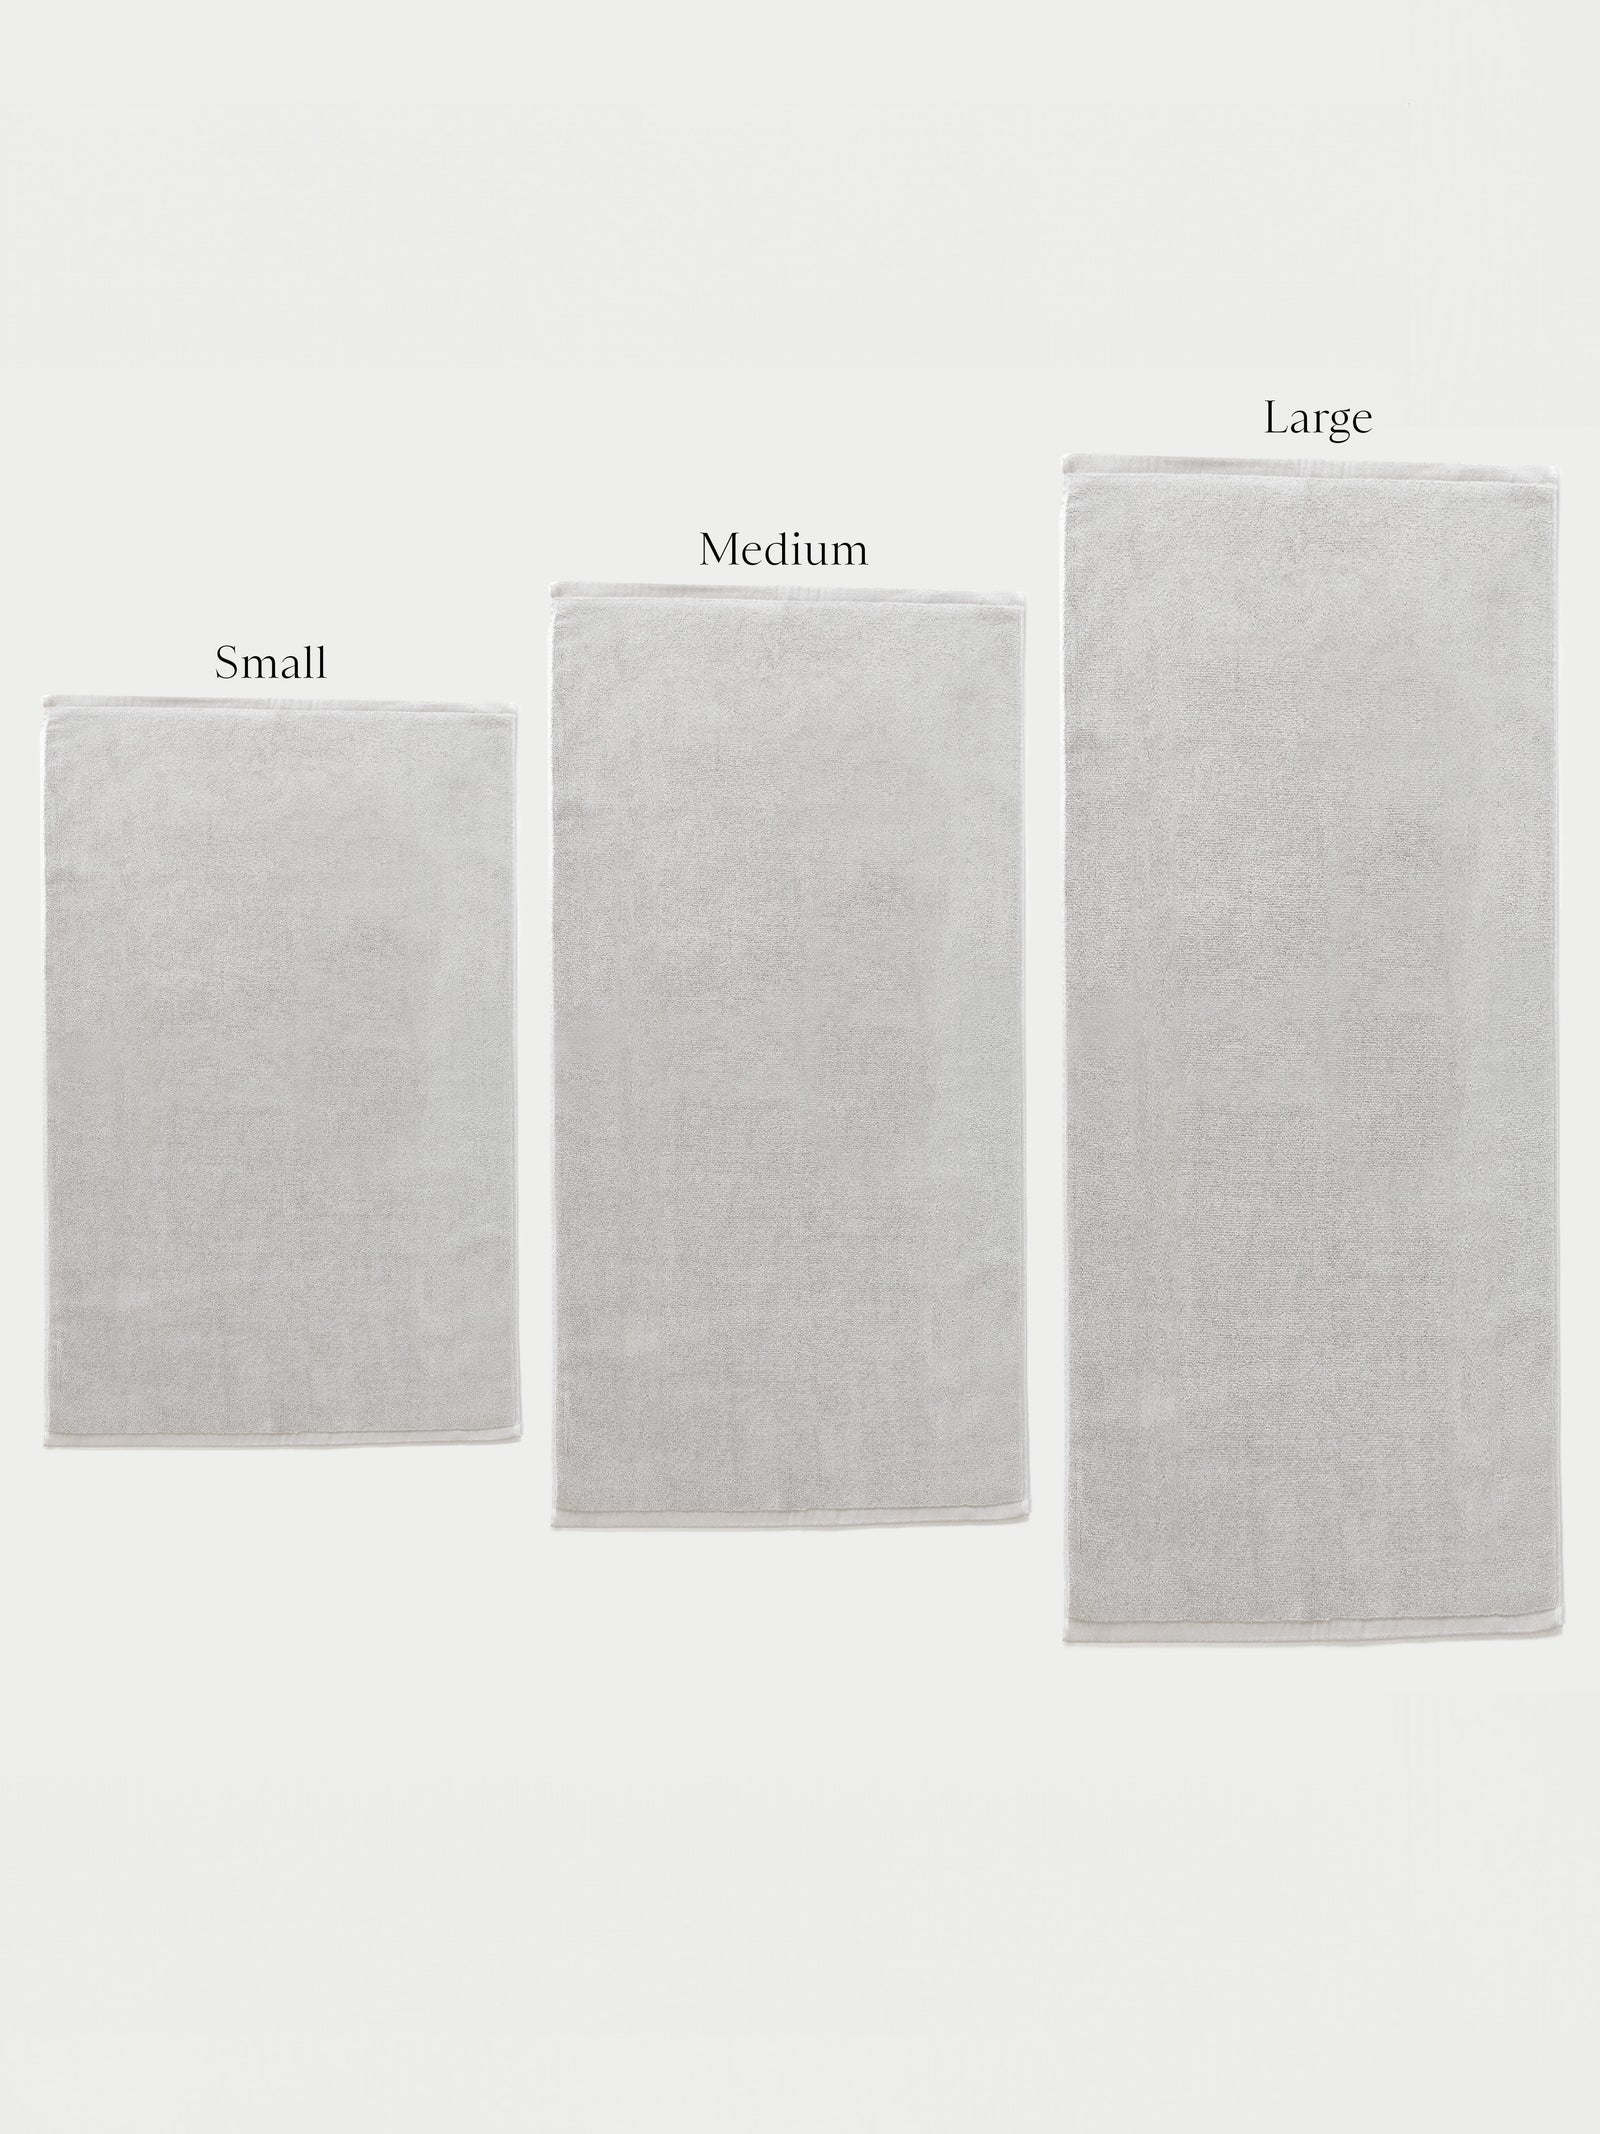 Three sizes of bath mats